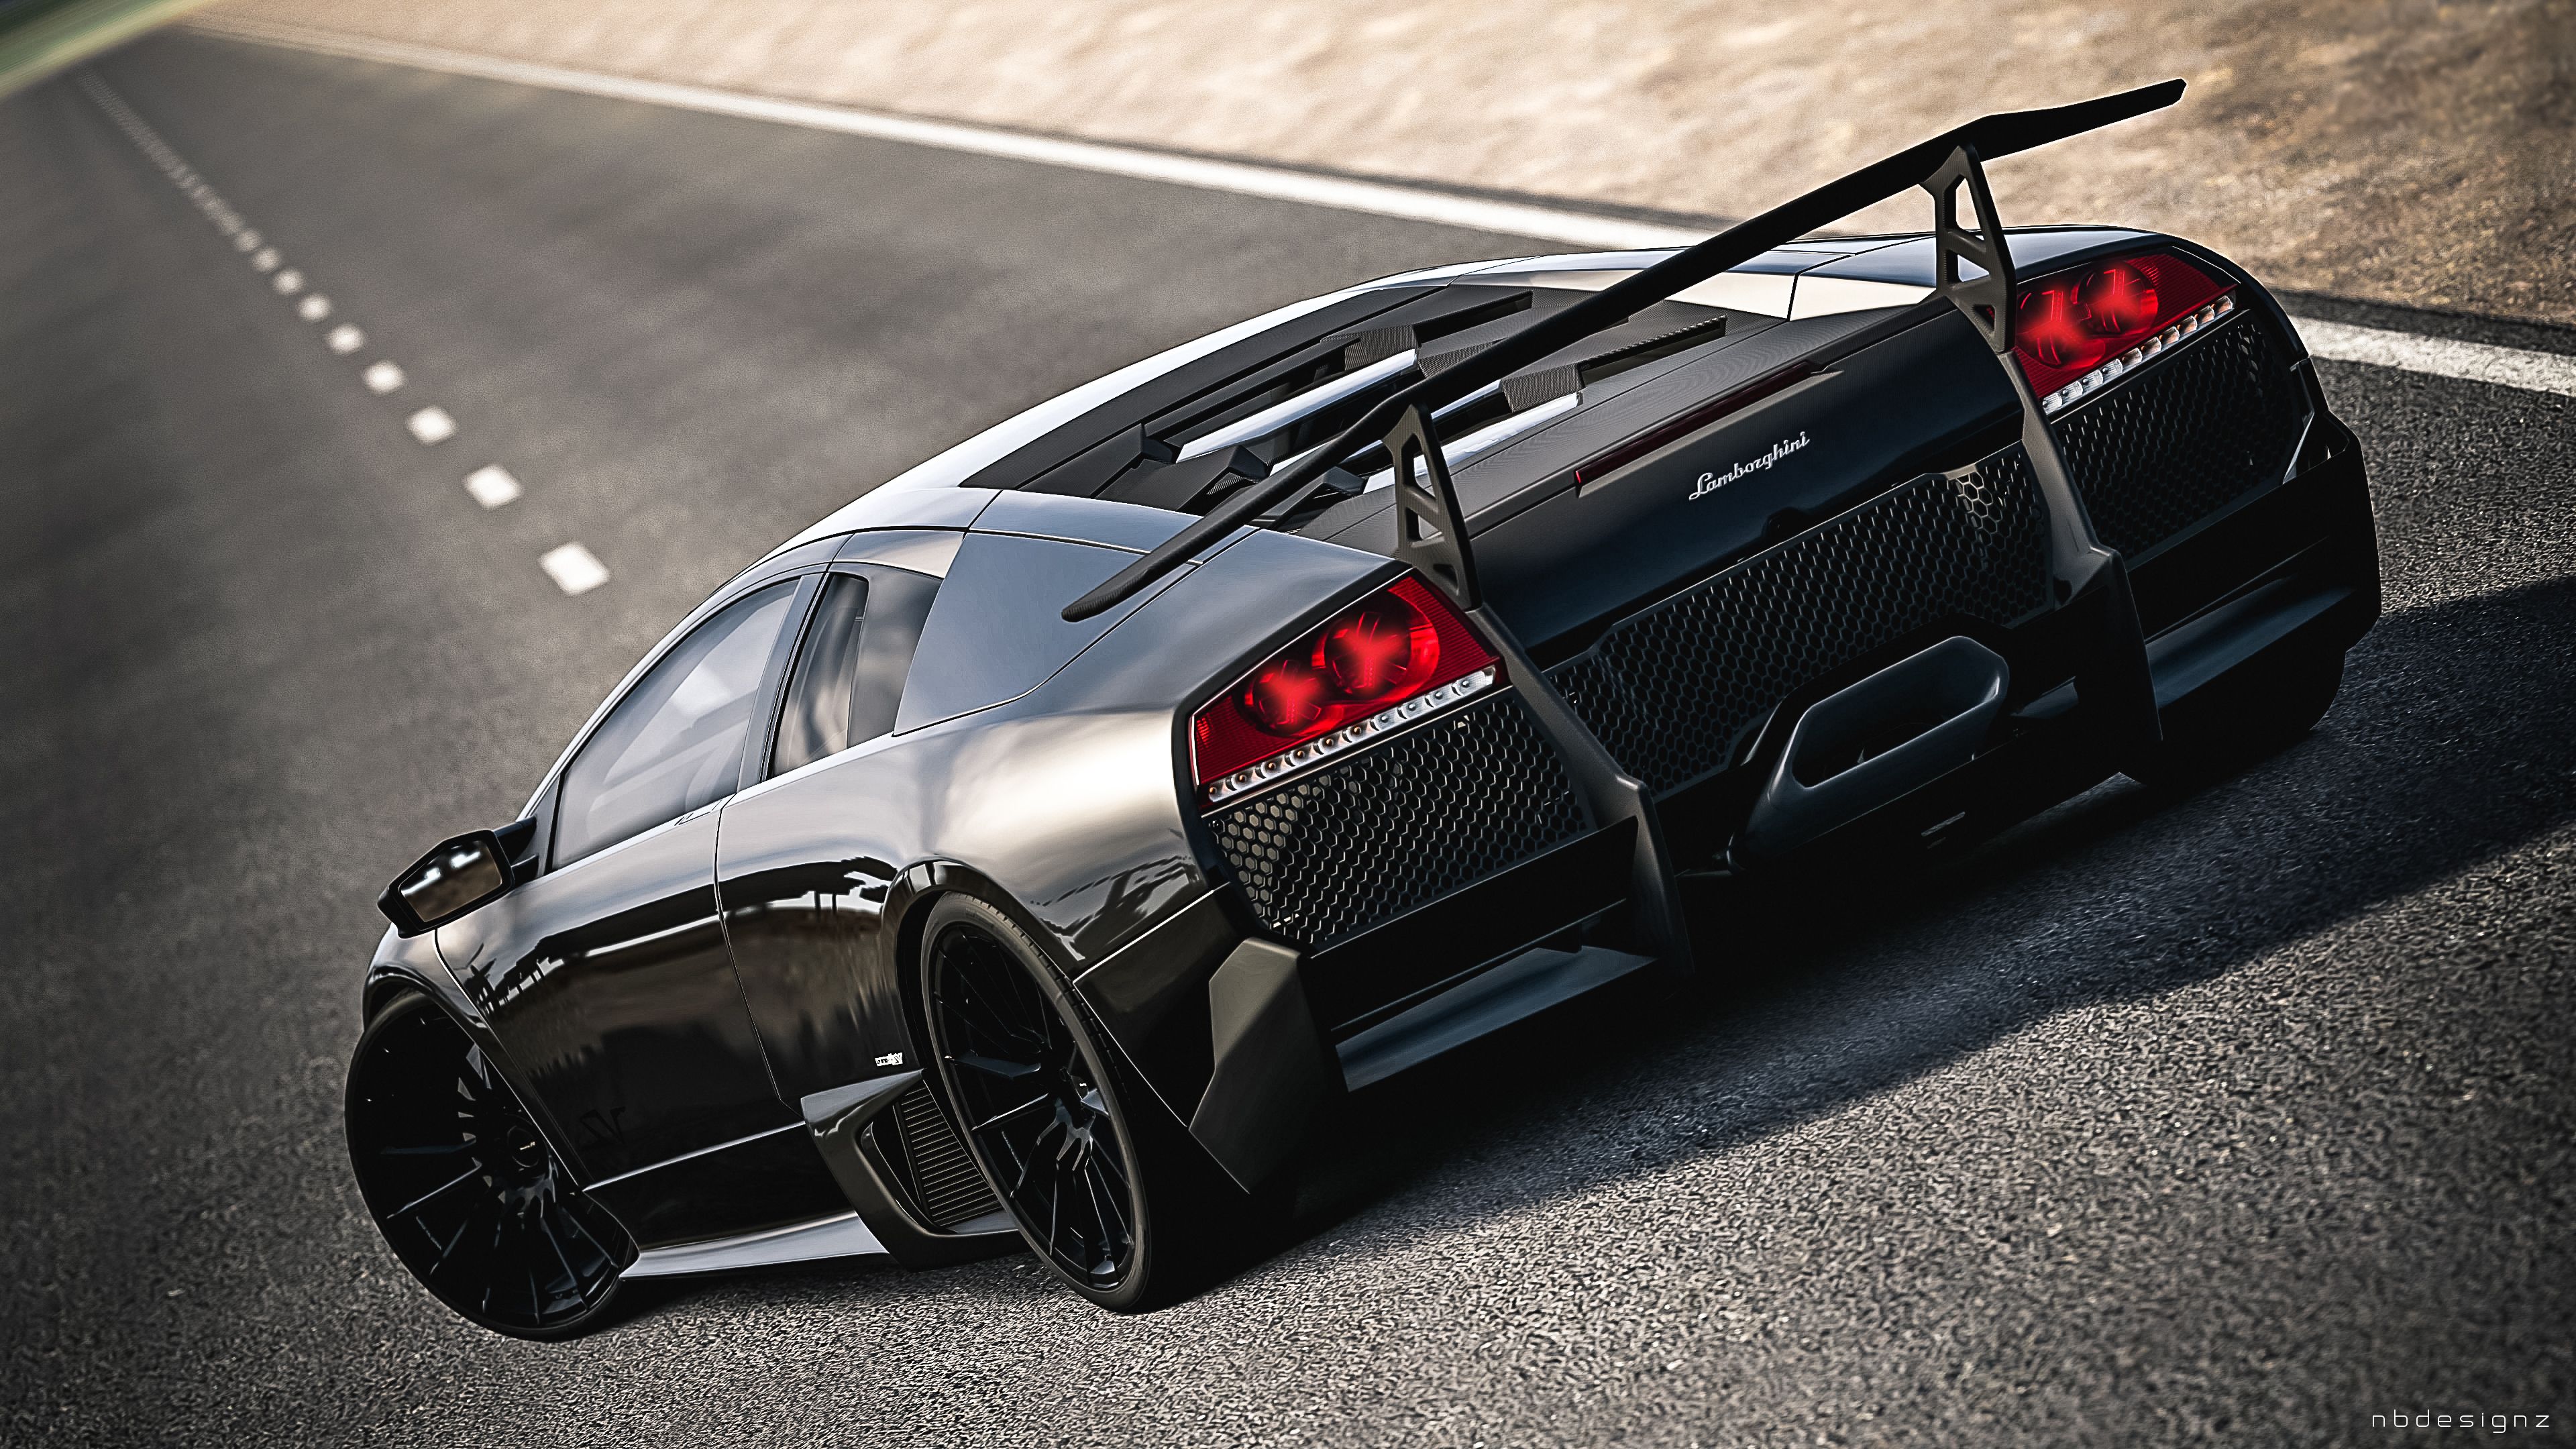 Lamborghini Murciélago 4k Ultra HD Wallpaper. Background Image